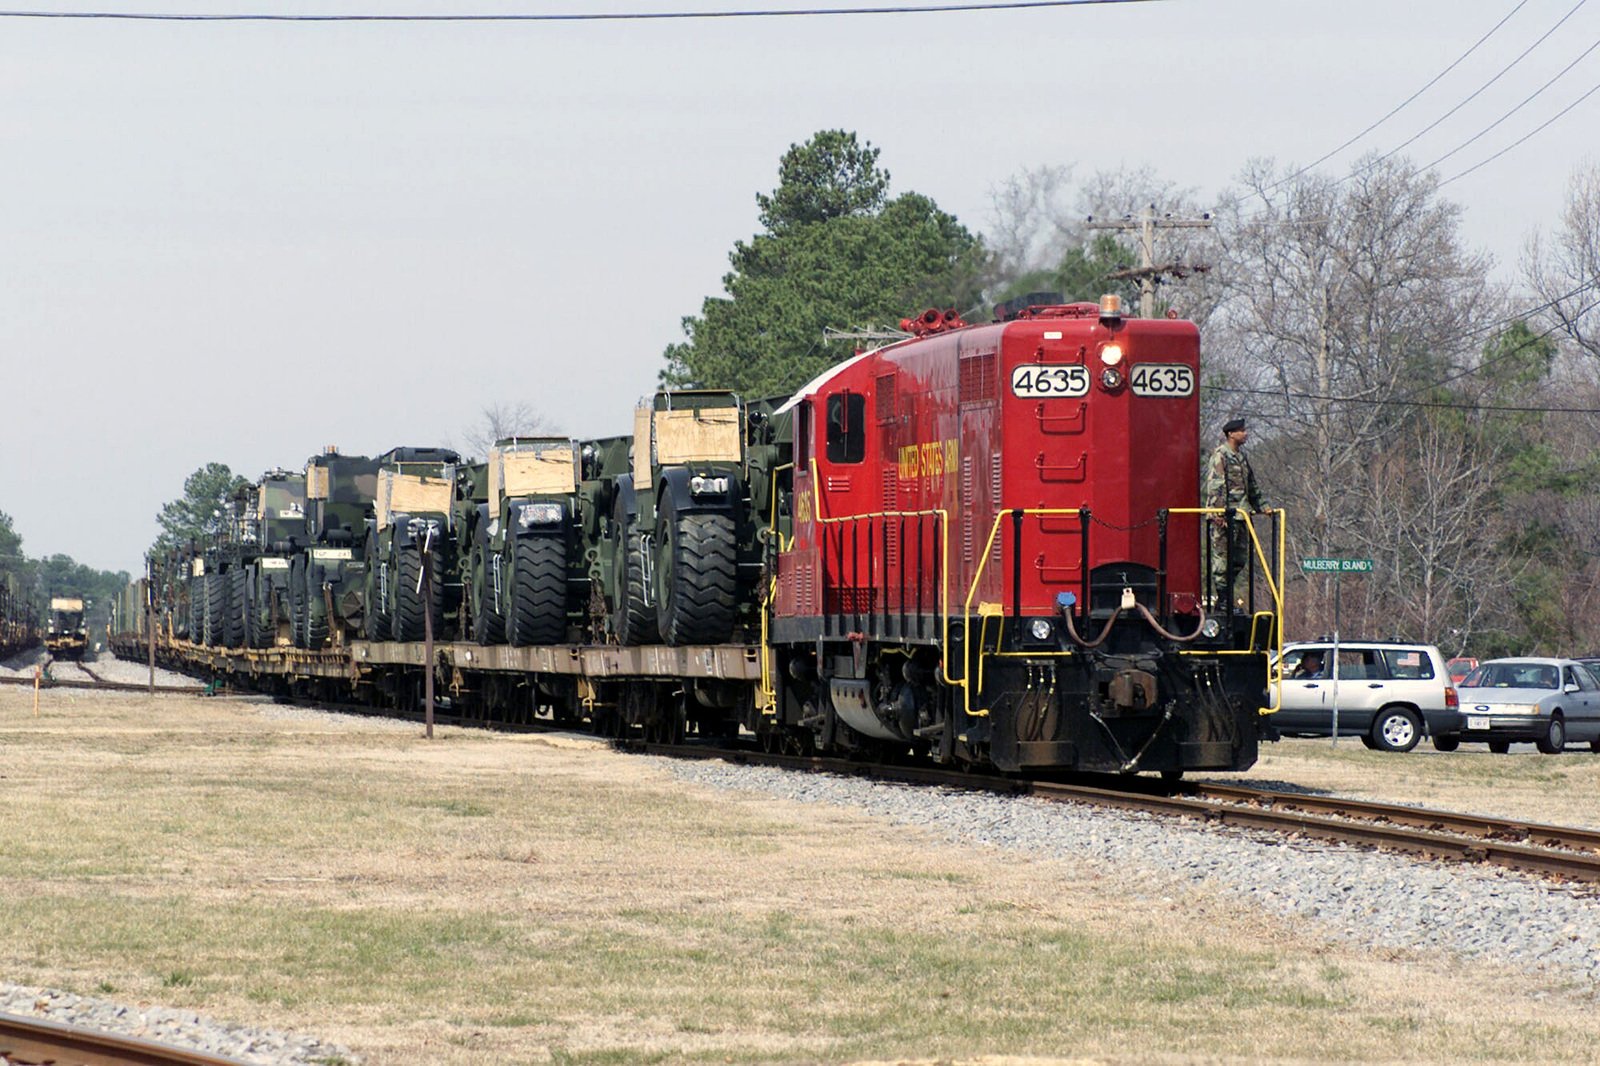 United States Military Railroad